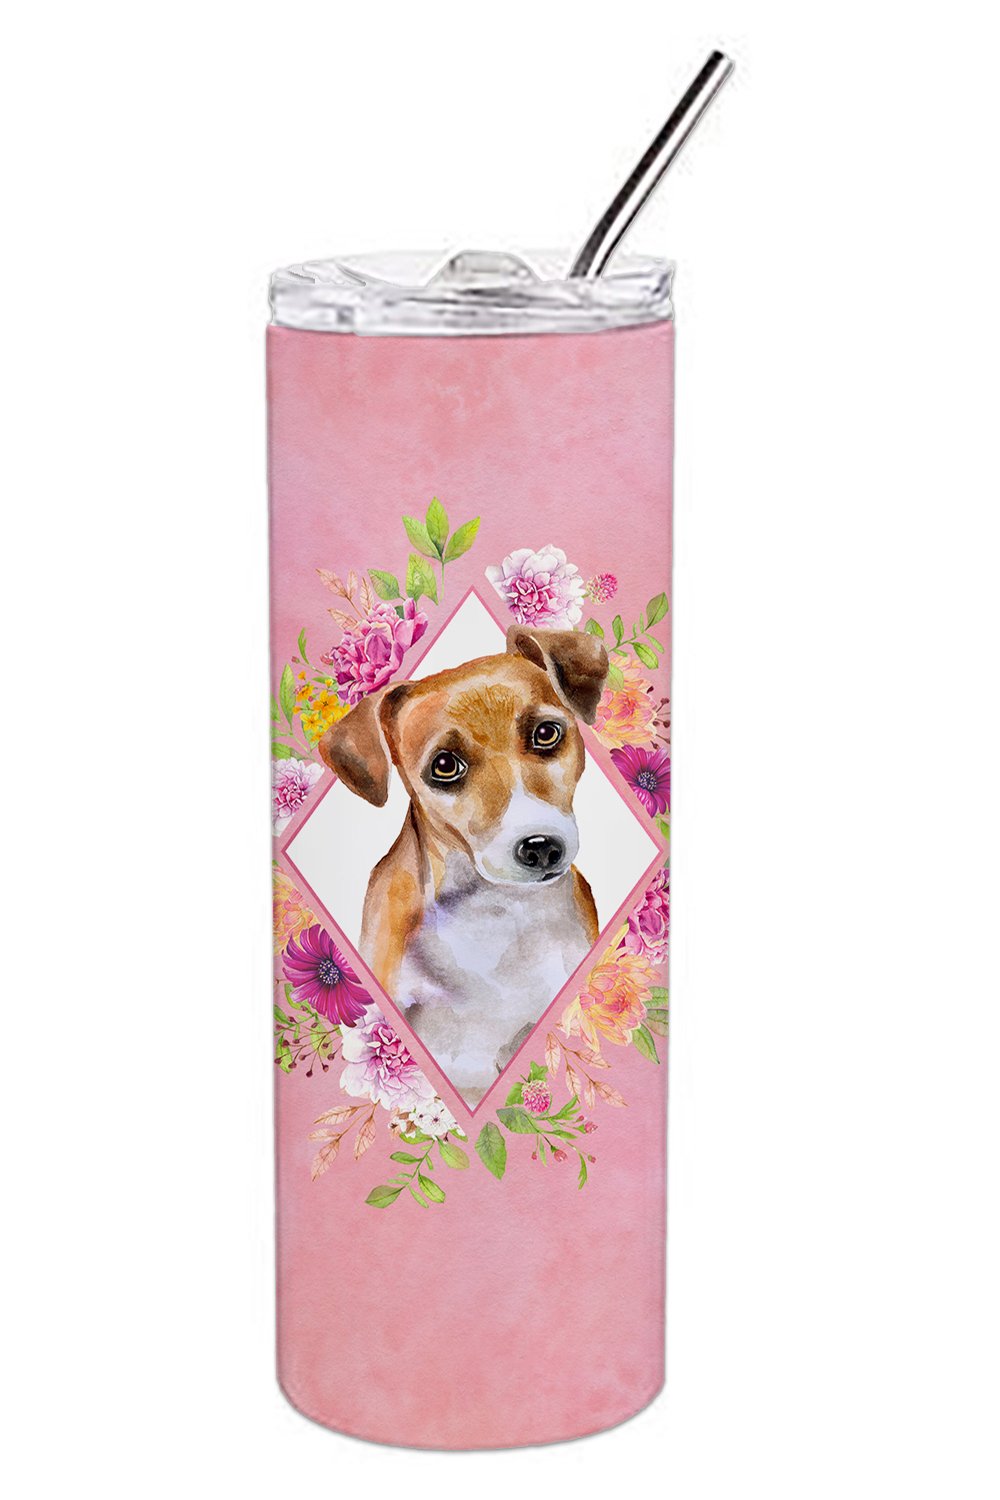 Jack Russell Terrier #1 Pink Flowers Double Walled Stainless Steel 20 oz Skinny Tumbler CK4155TBL20 by Caroline's Treasures